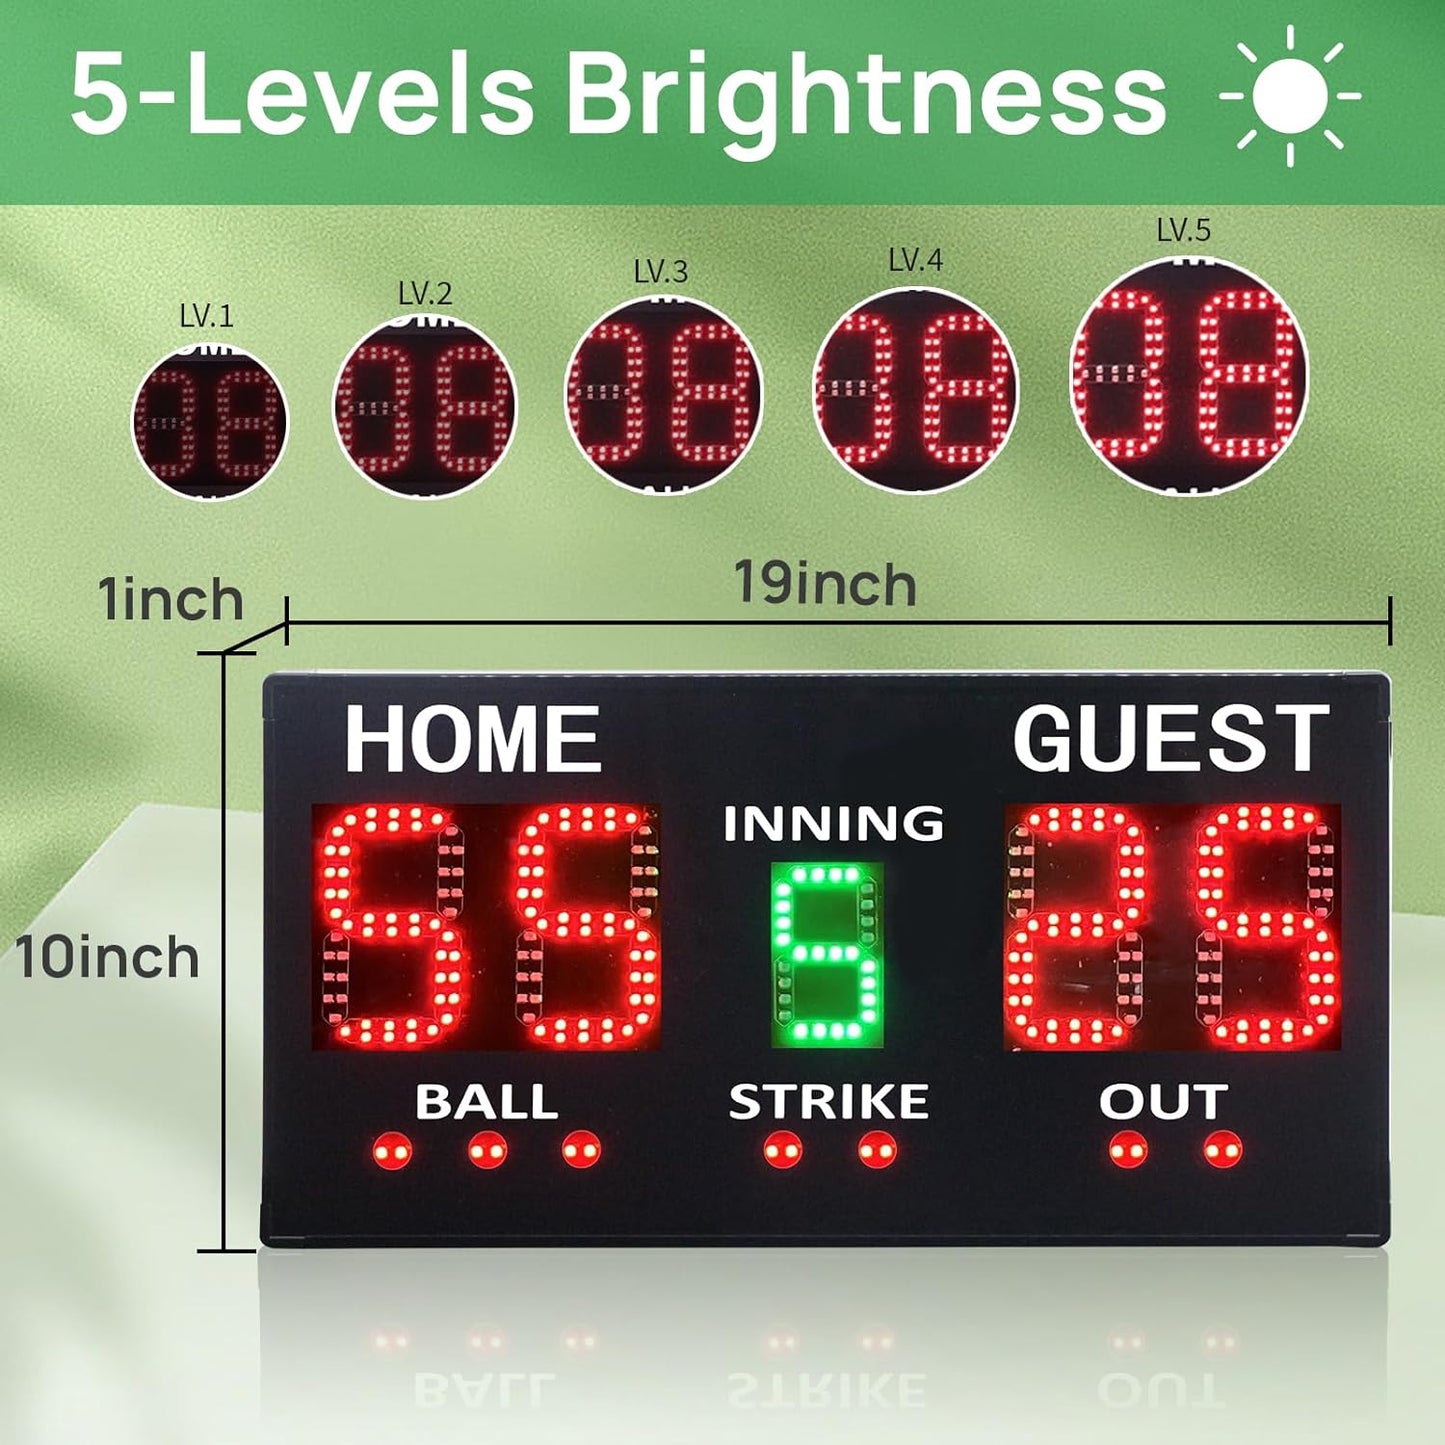 YZ LED Portable Baseball Scoreboard for Fence, High-Light Digital Scoreboard with Remote, Rechargeable Wireless Electronic Baseball Scoreboard, Baseball Score Keeper with Innings Balls Strik